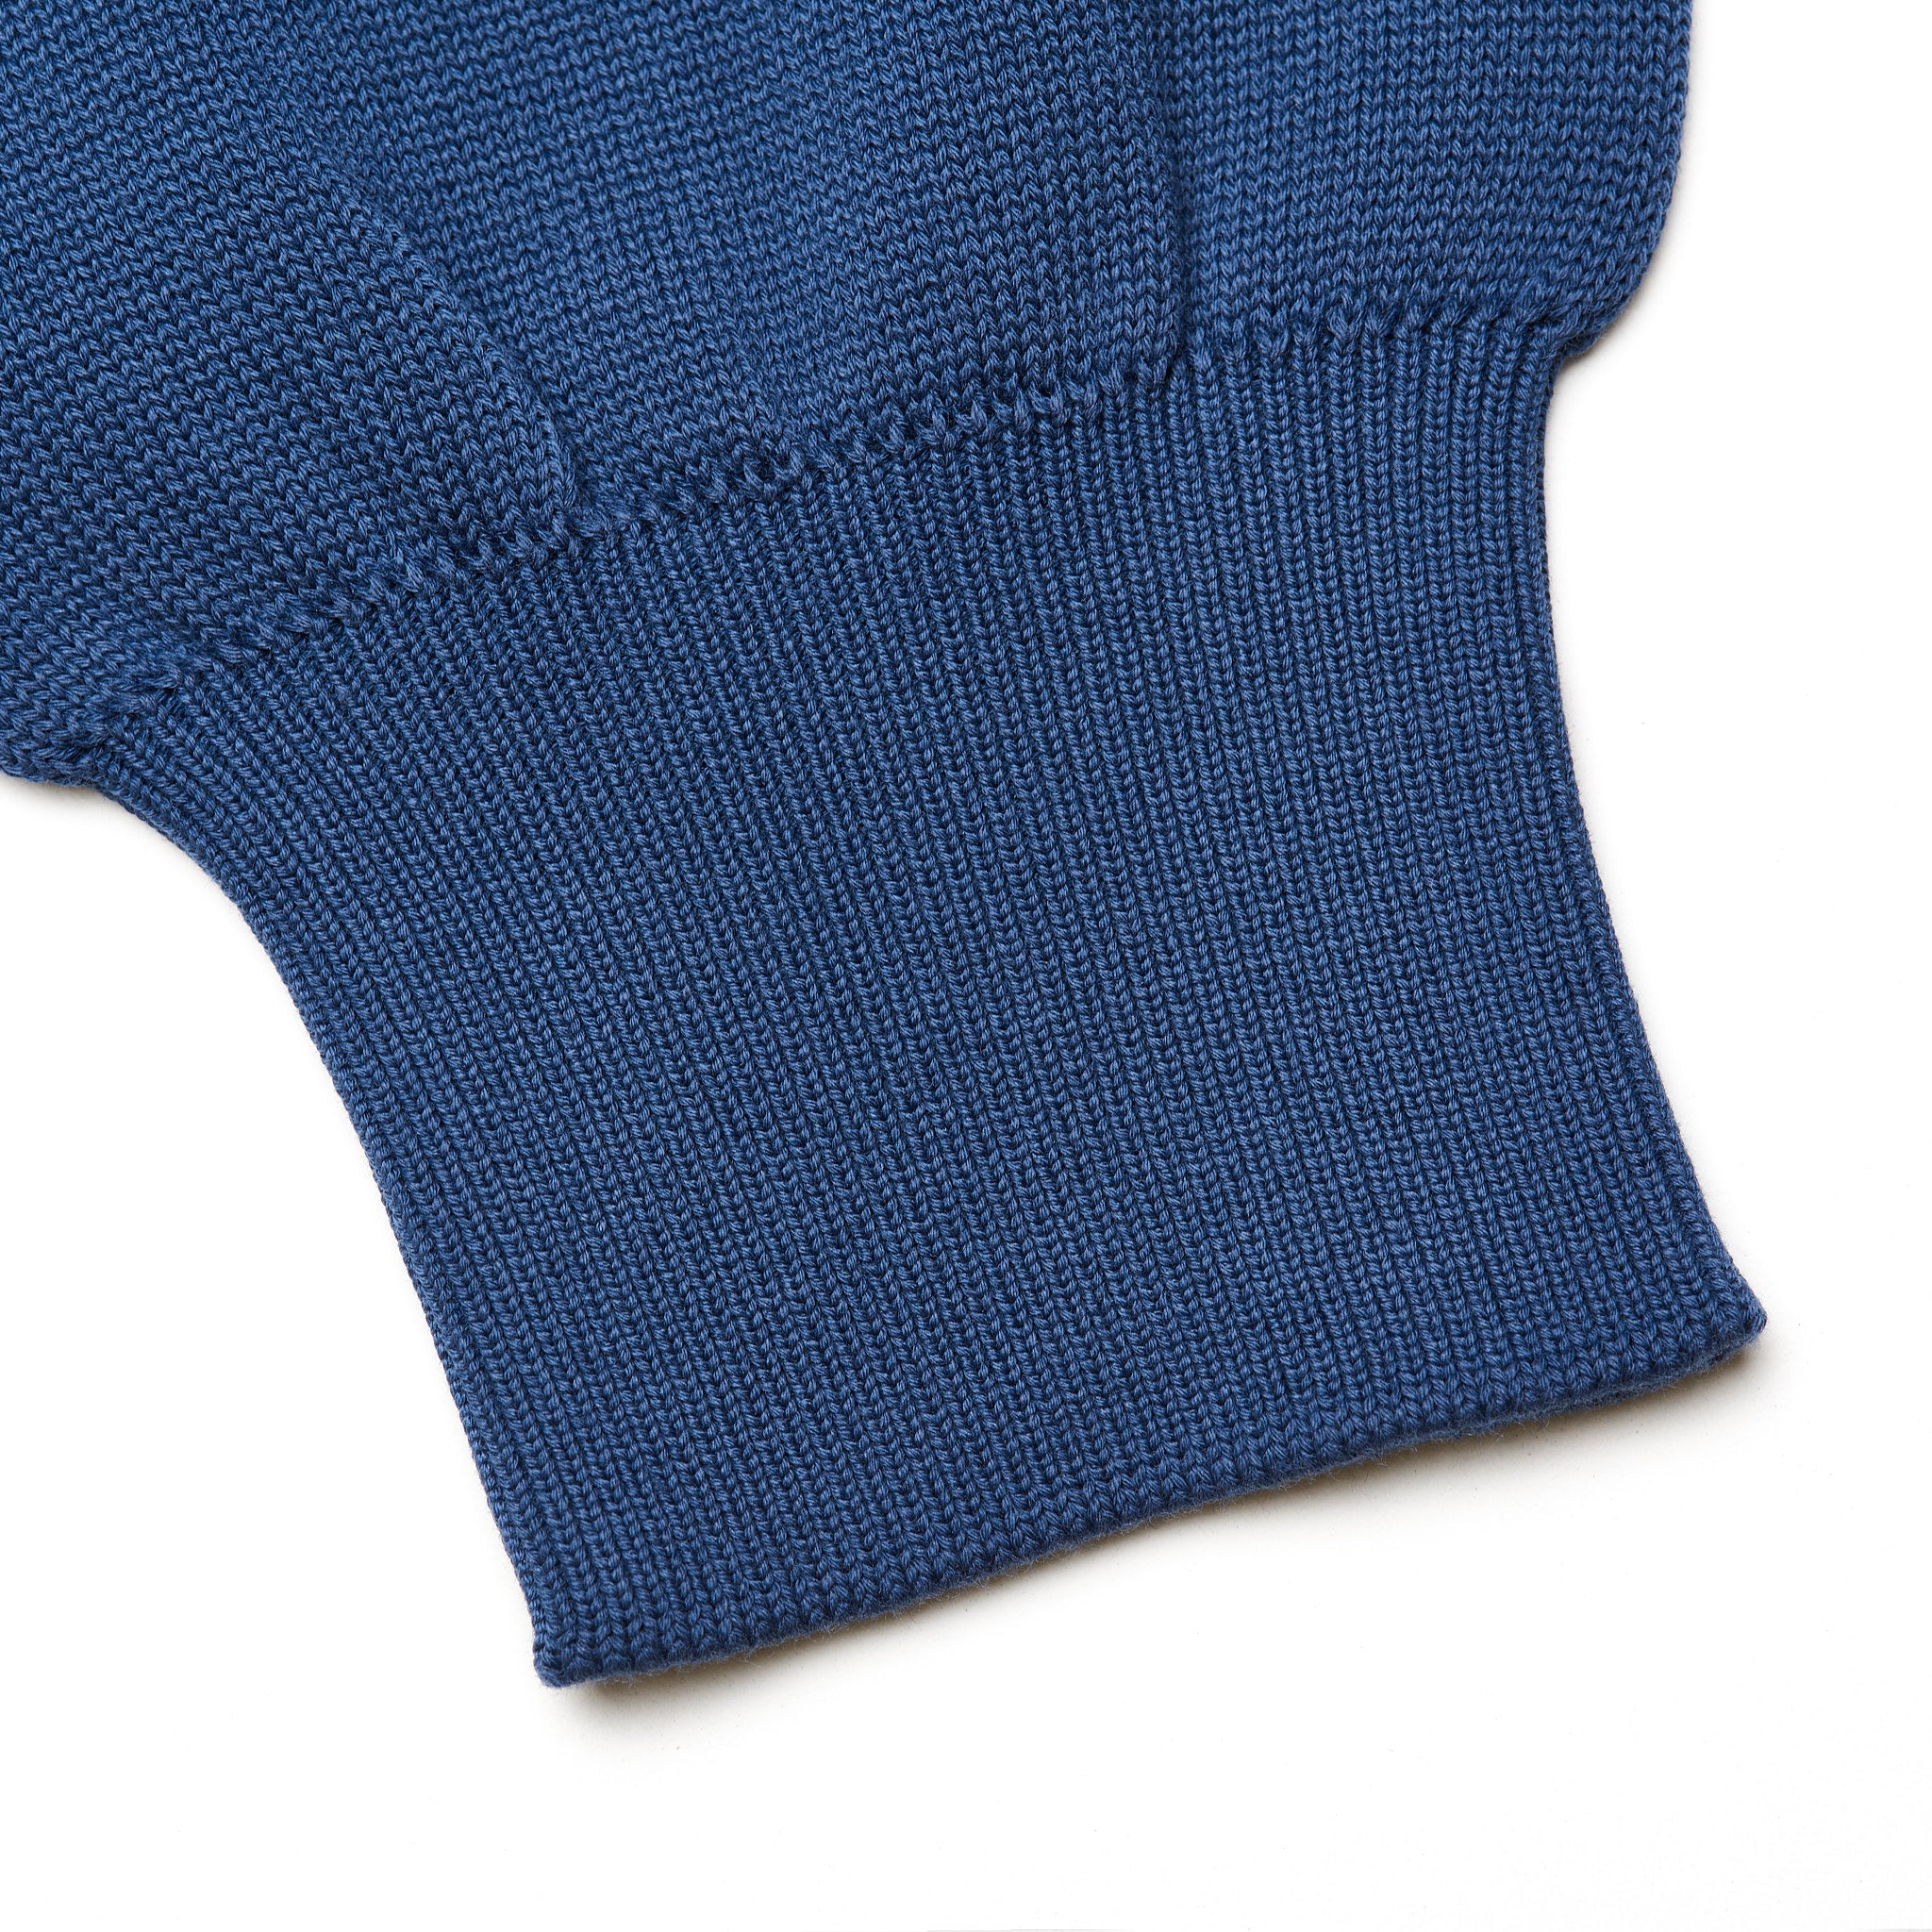 FEDELI Blue Cotton V-Neck Sweater EU 50 NEW US M FEDELI